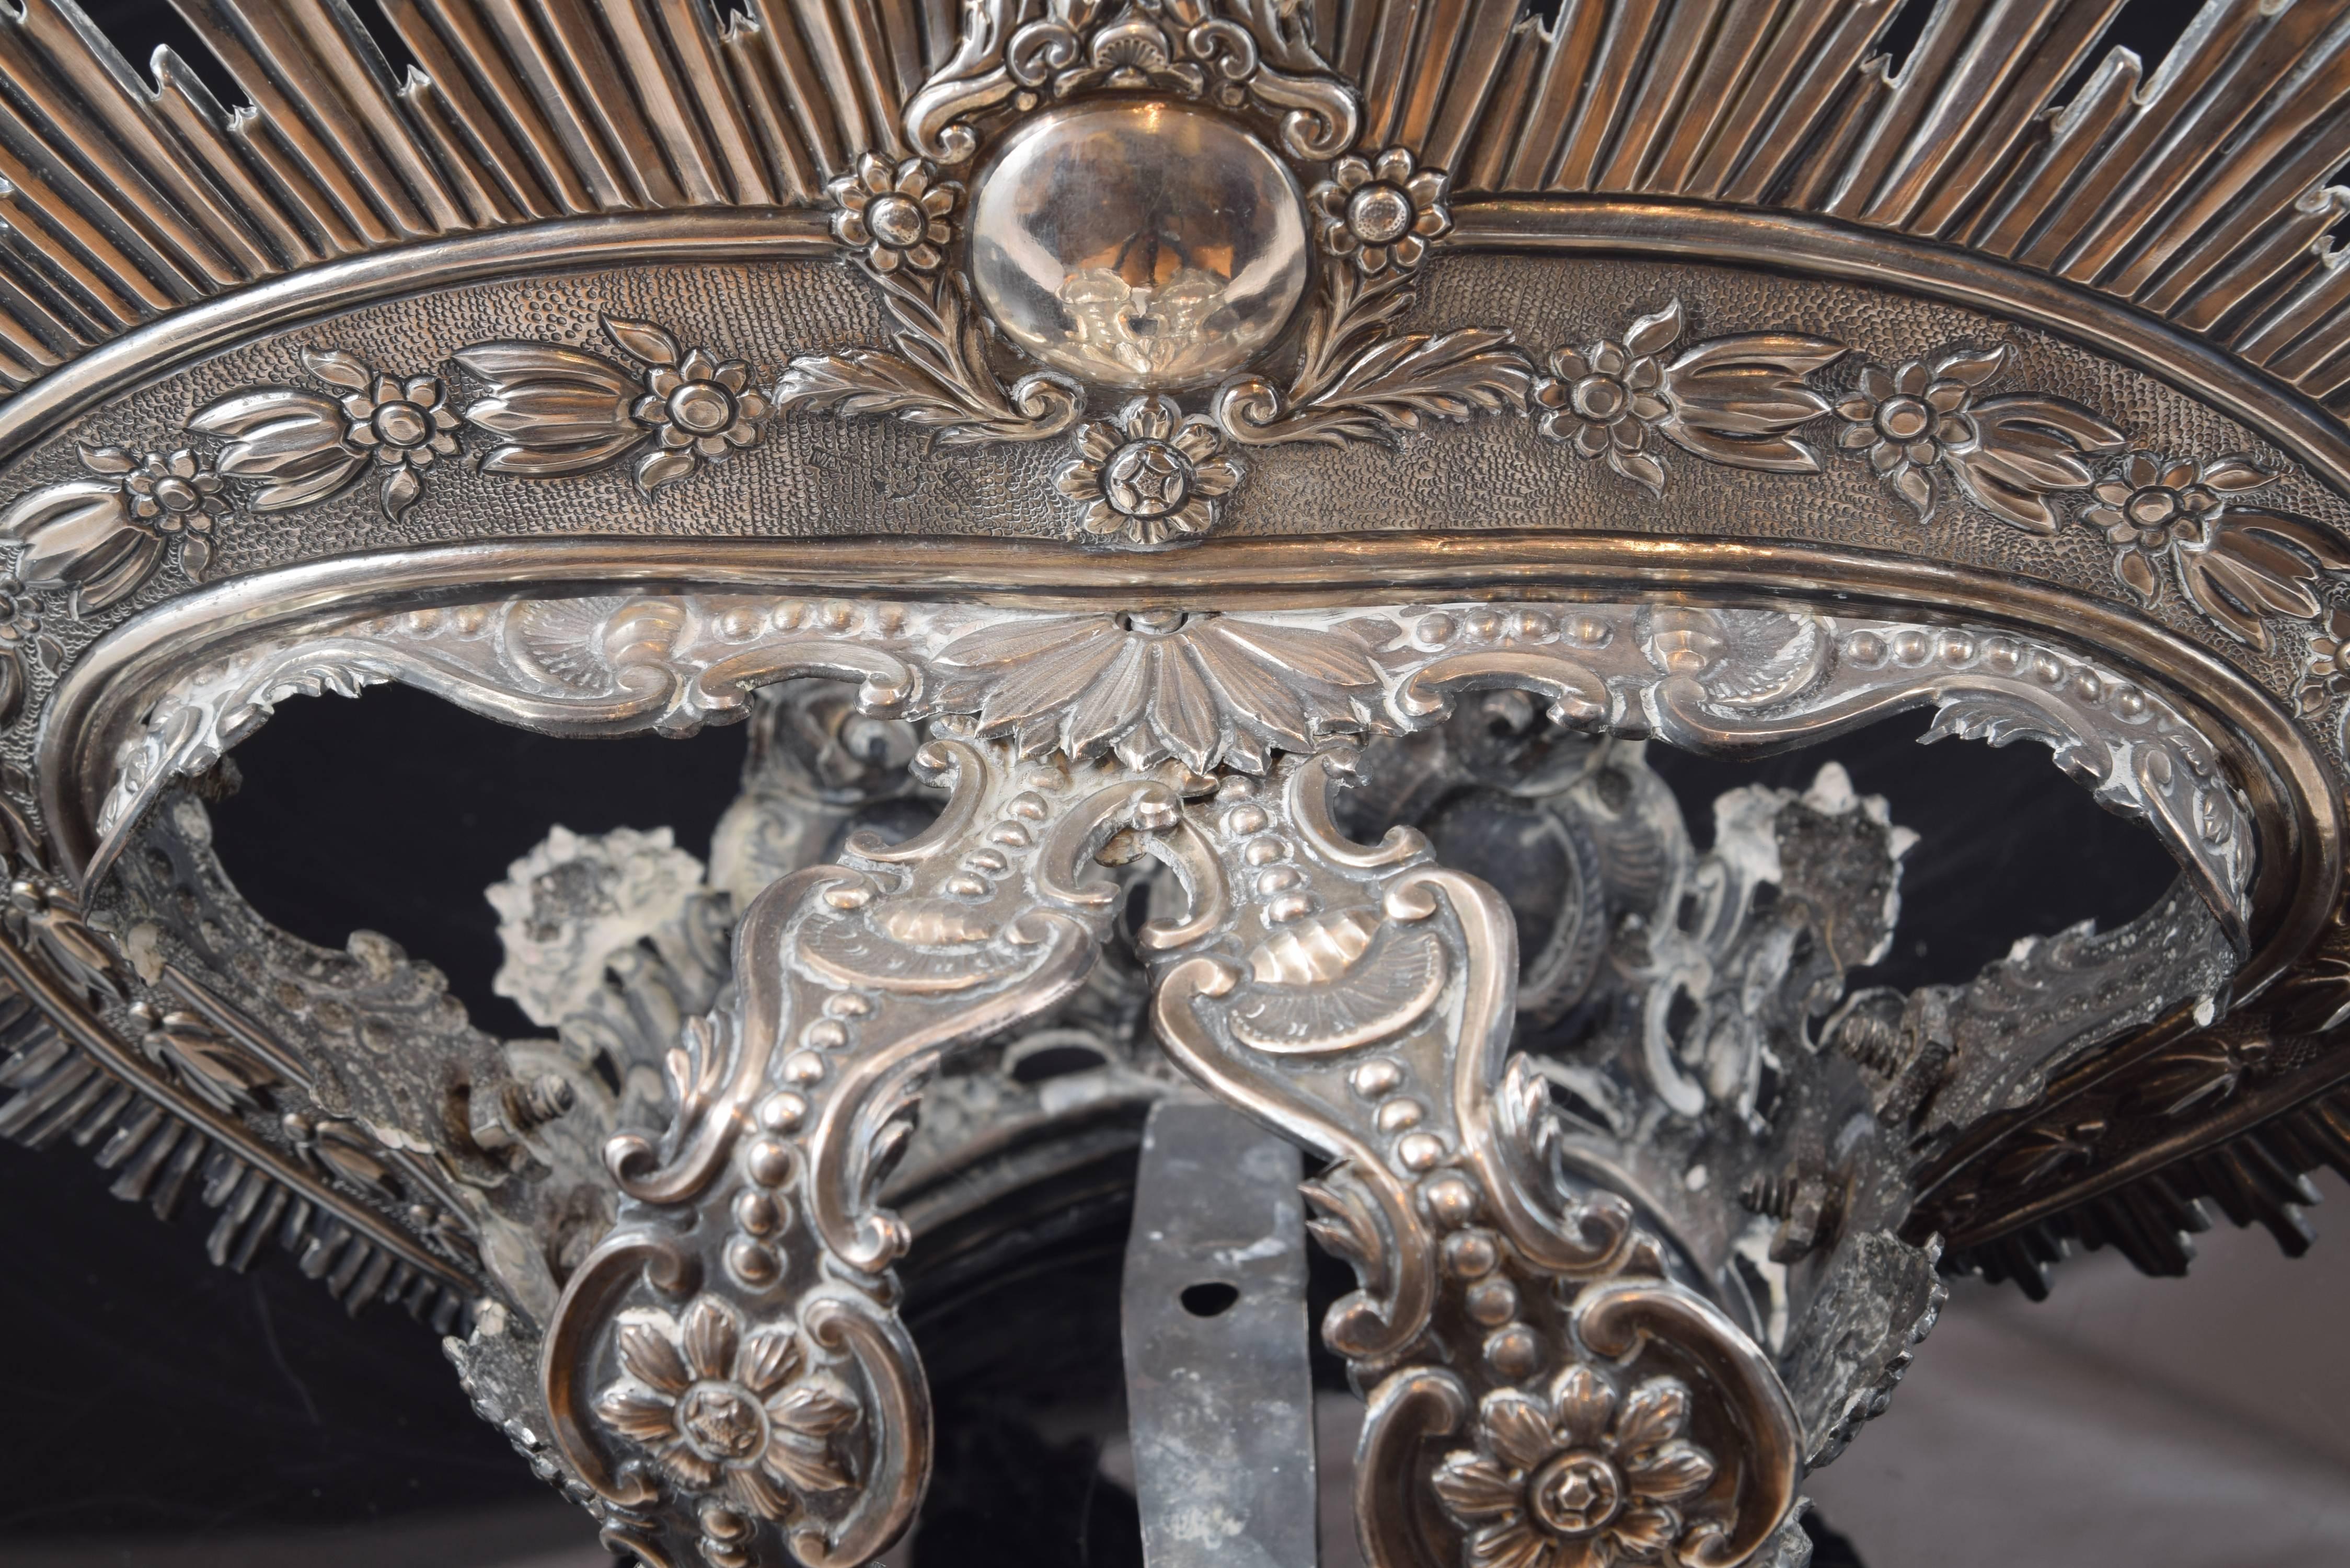 Spanish Crown, Silver with Hallmarks, Cordoba, Spain, 1827